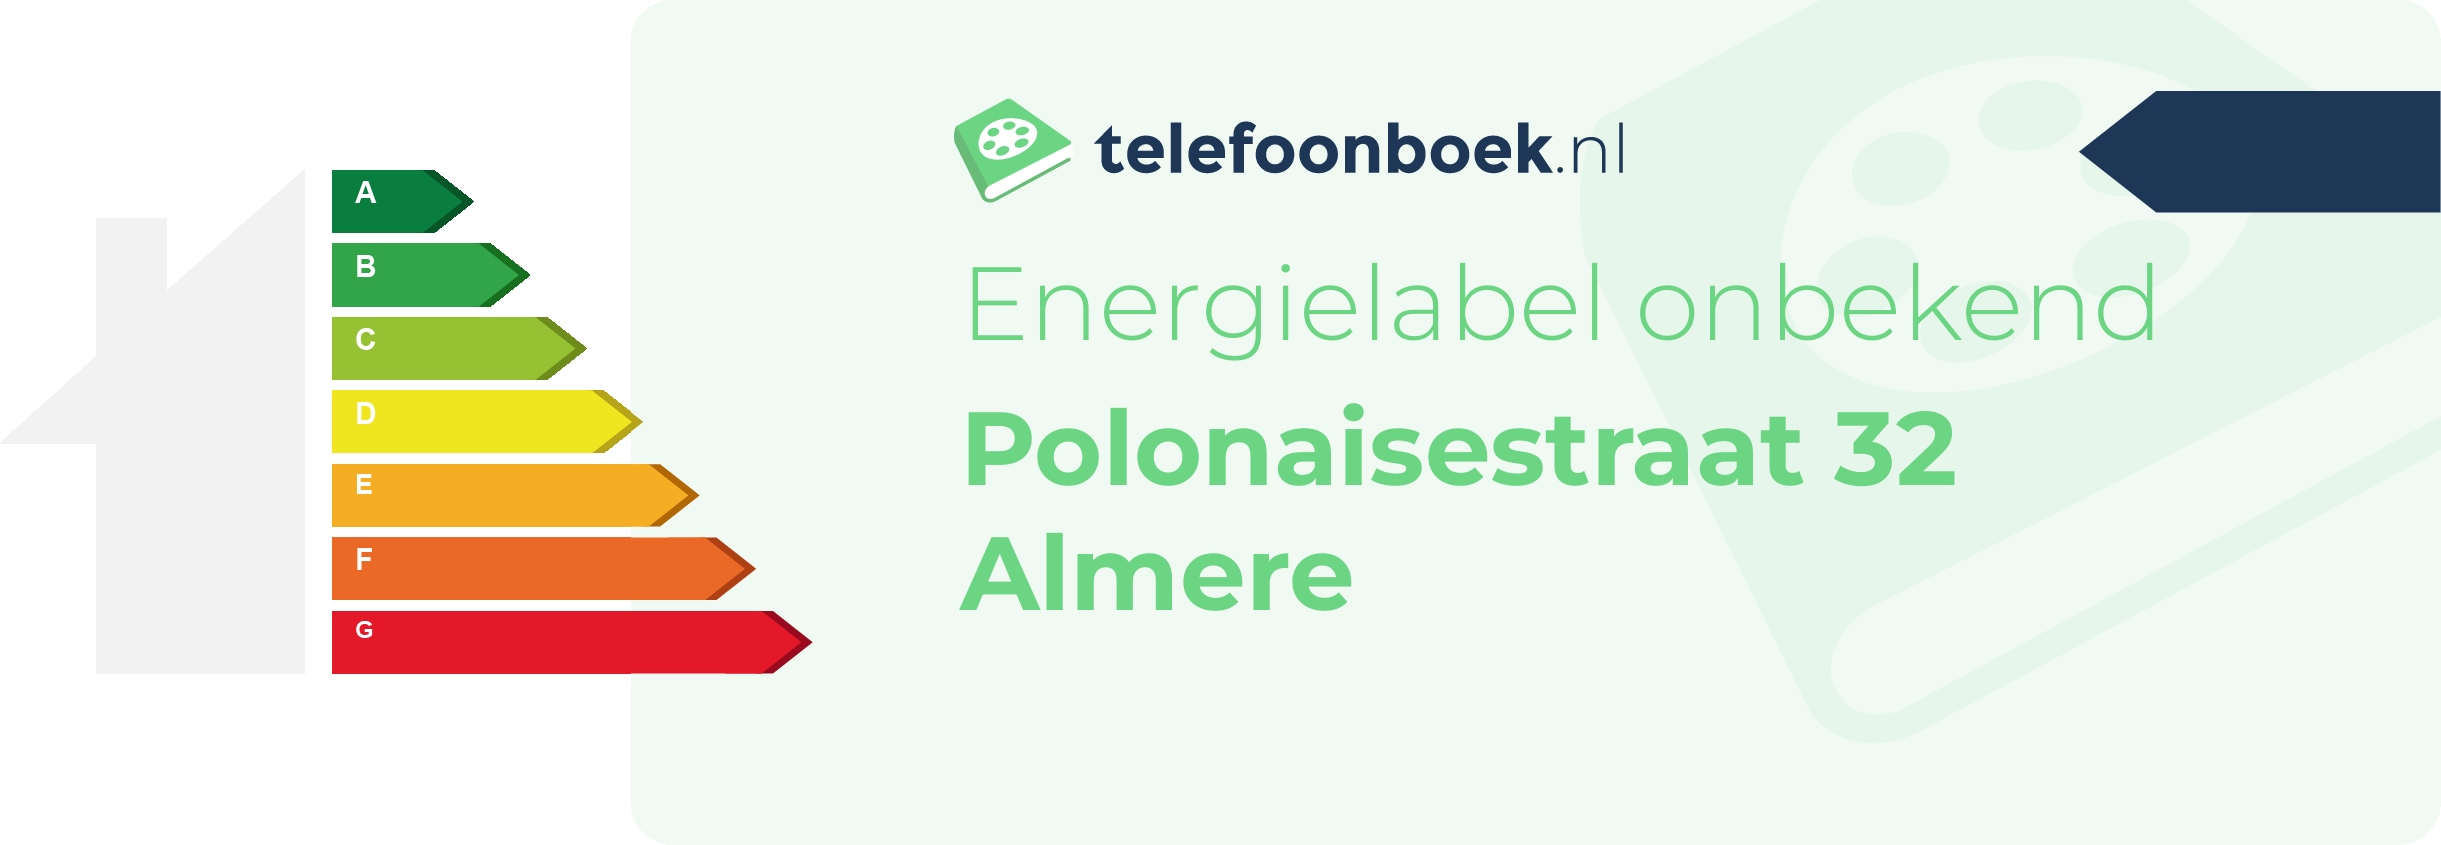 Energielabel Polonaisestraat 32 Almere